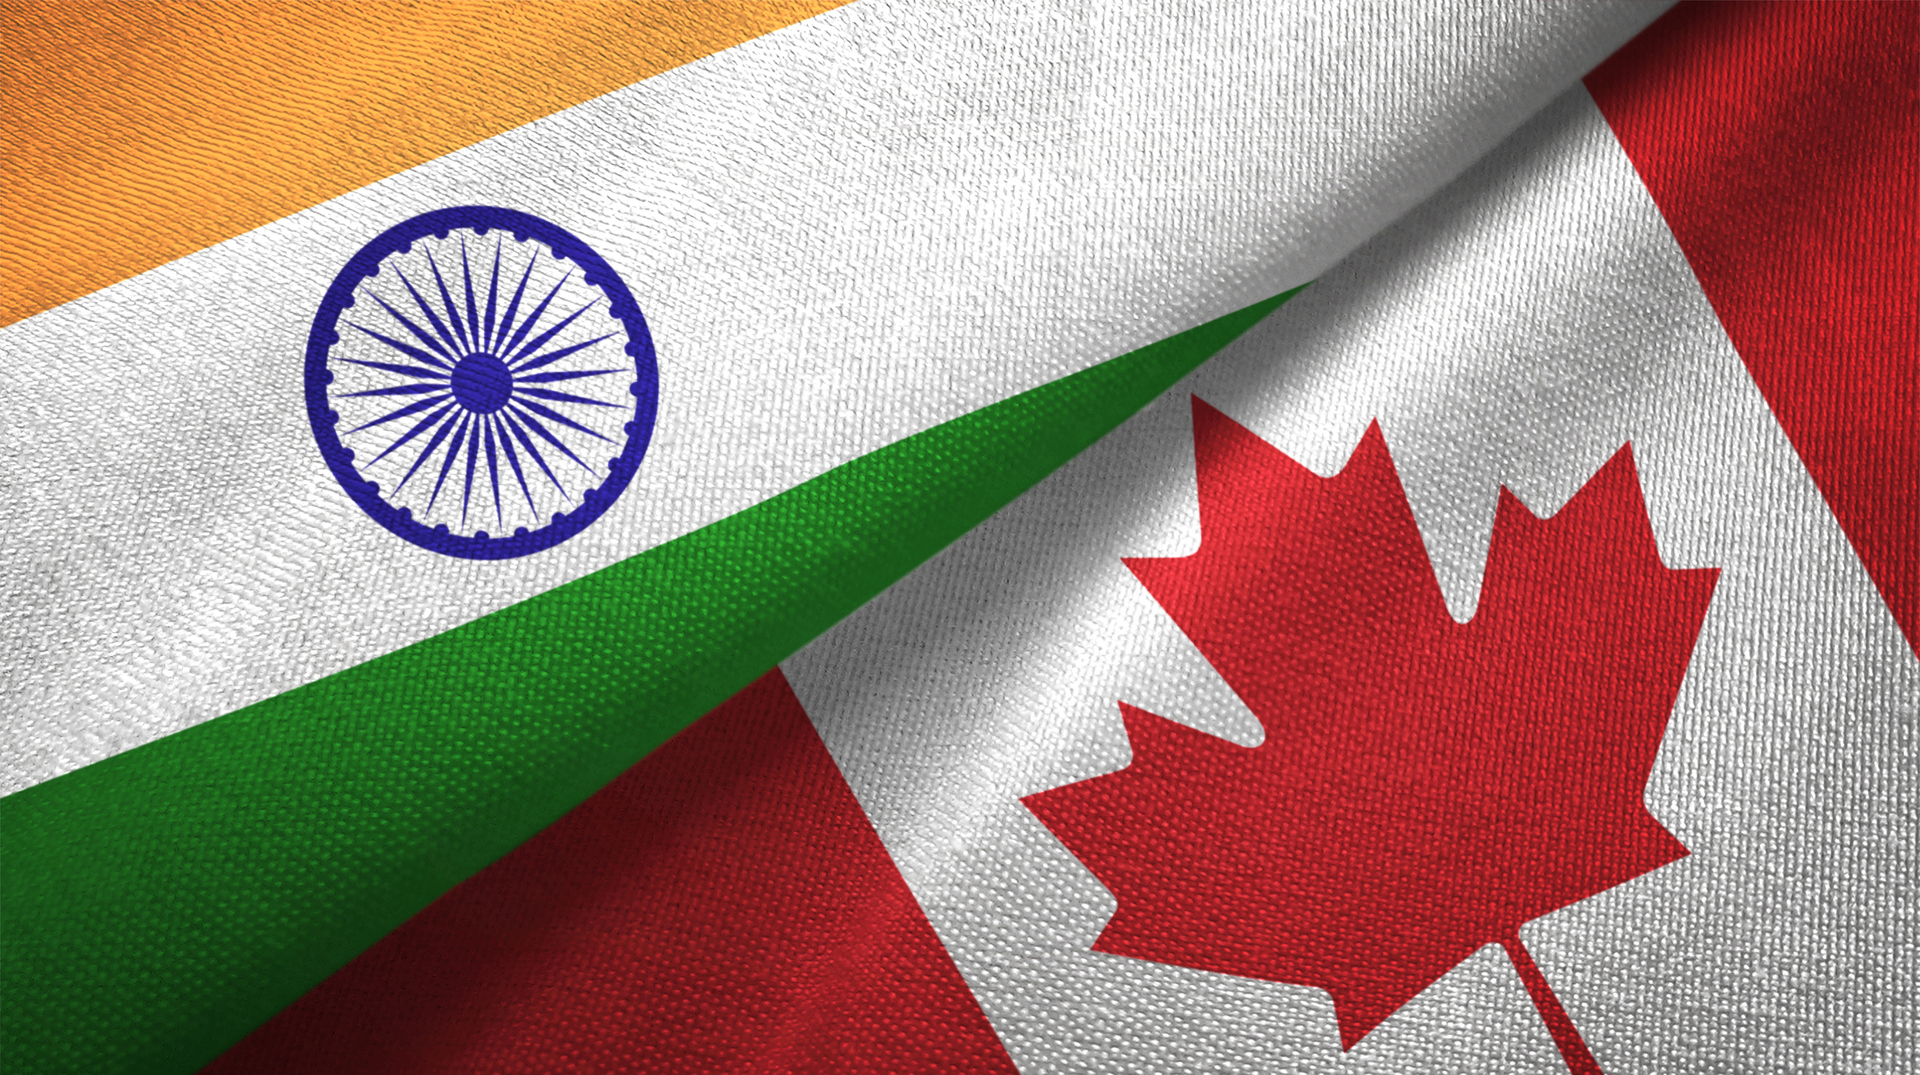 كندا تعلن طرد دبلوماسي هندي رفيع